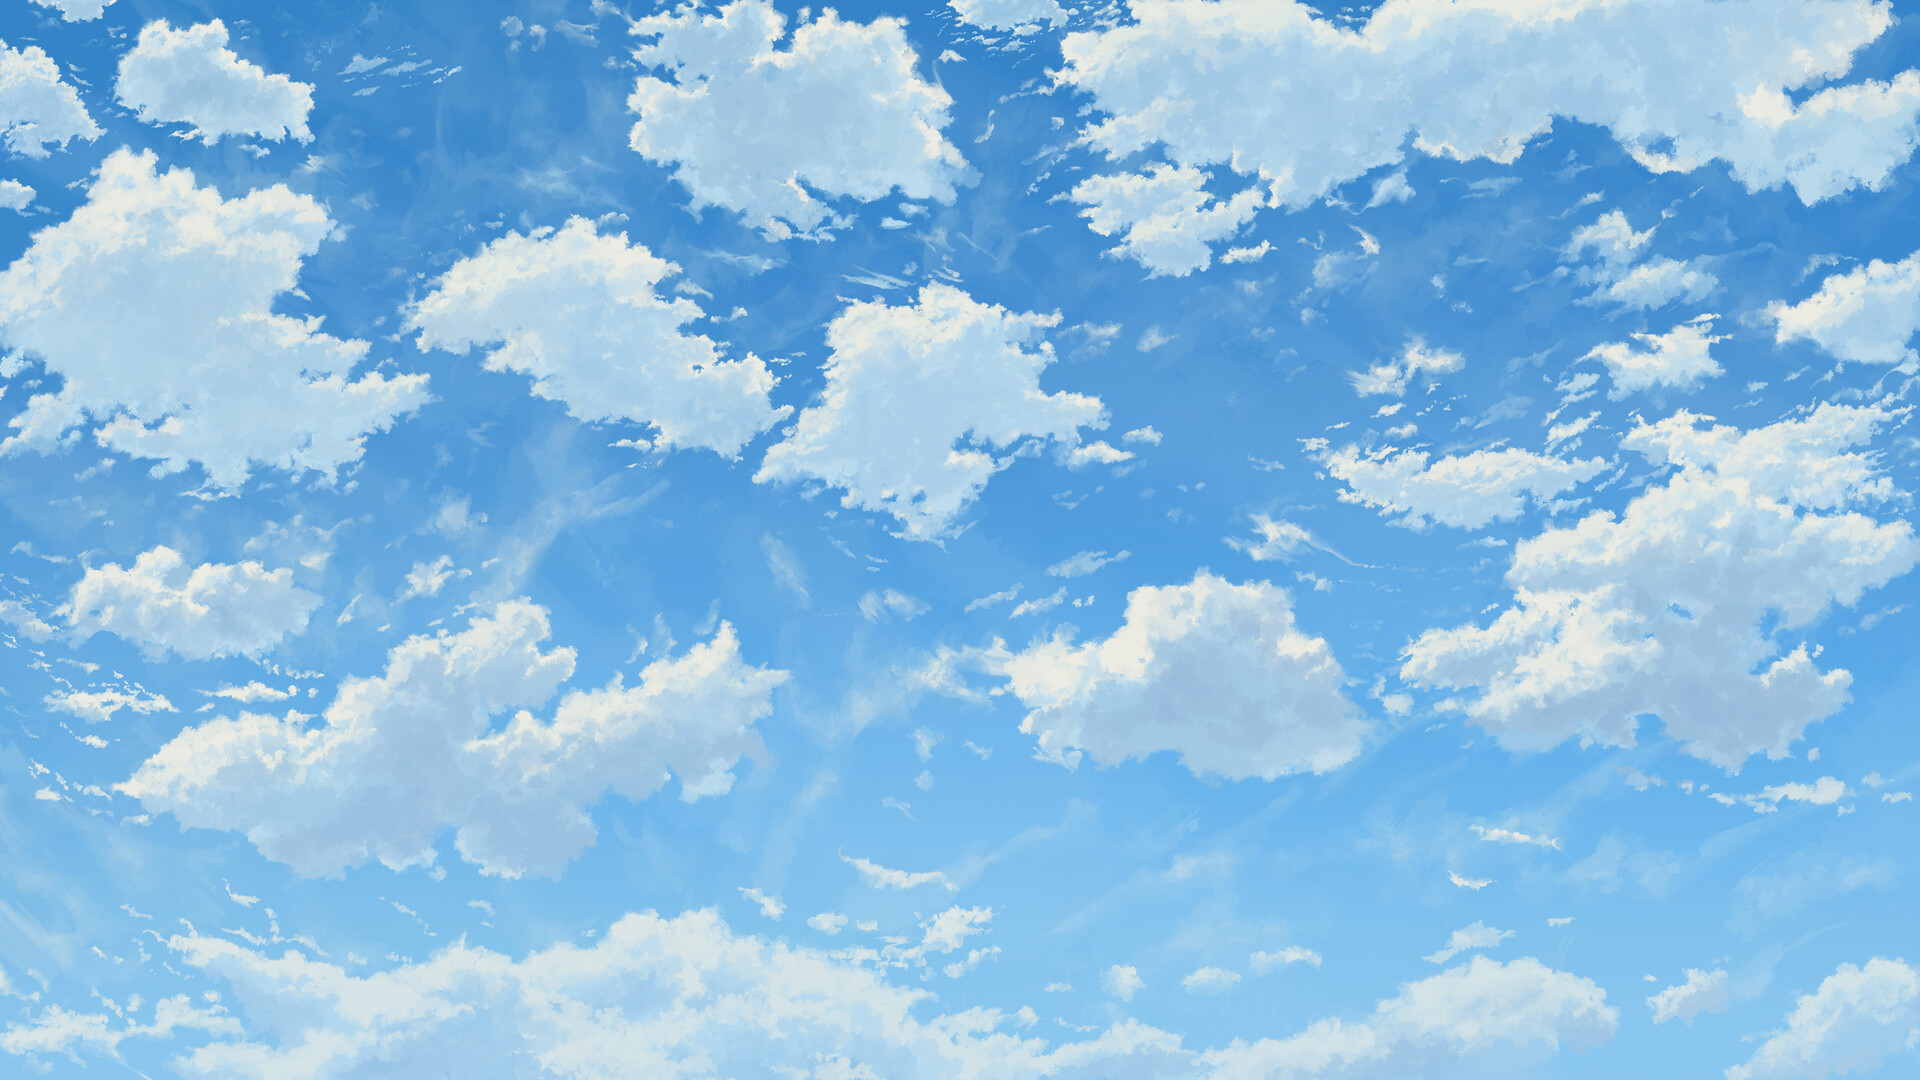 General 1920x1080 TJ (artist) digital art nature sky clouds